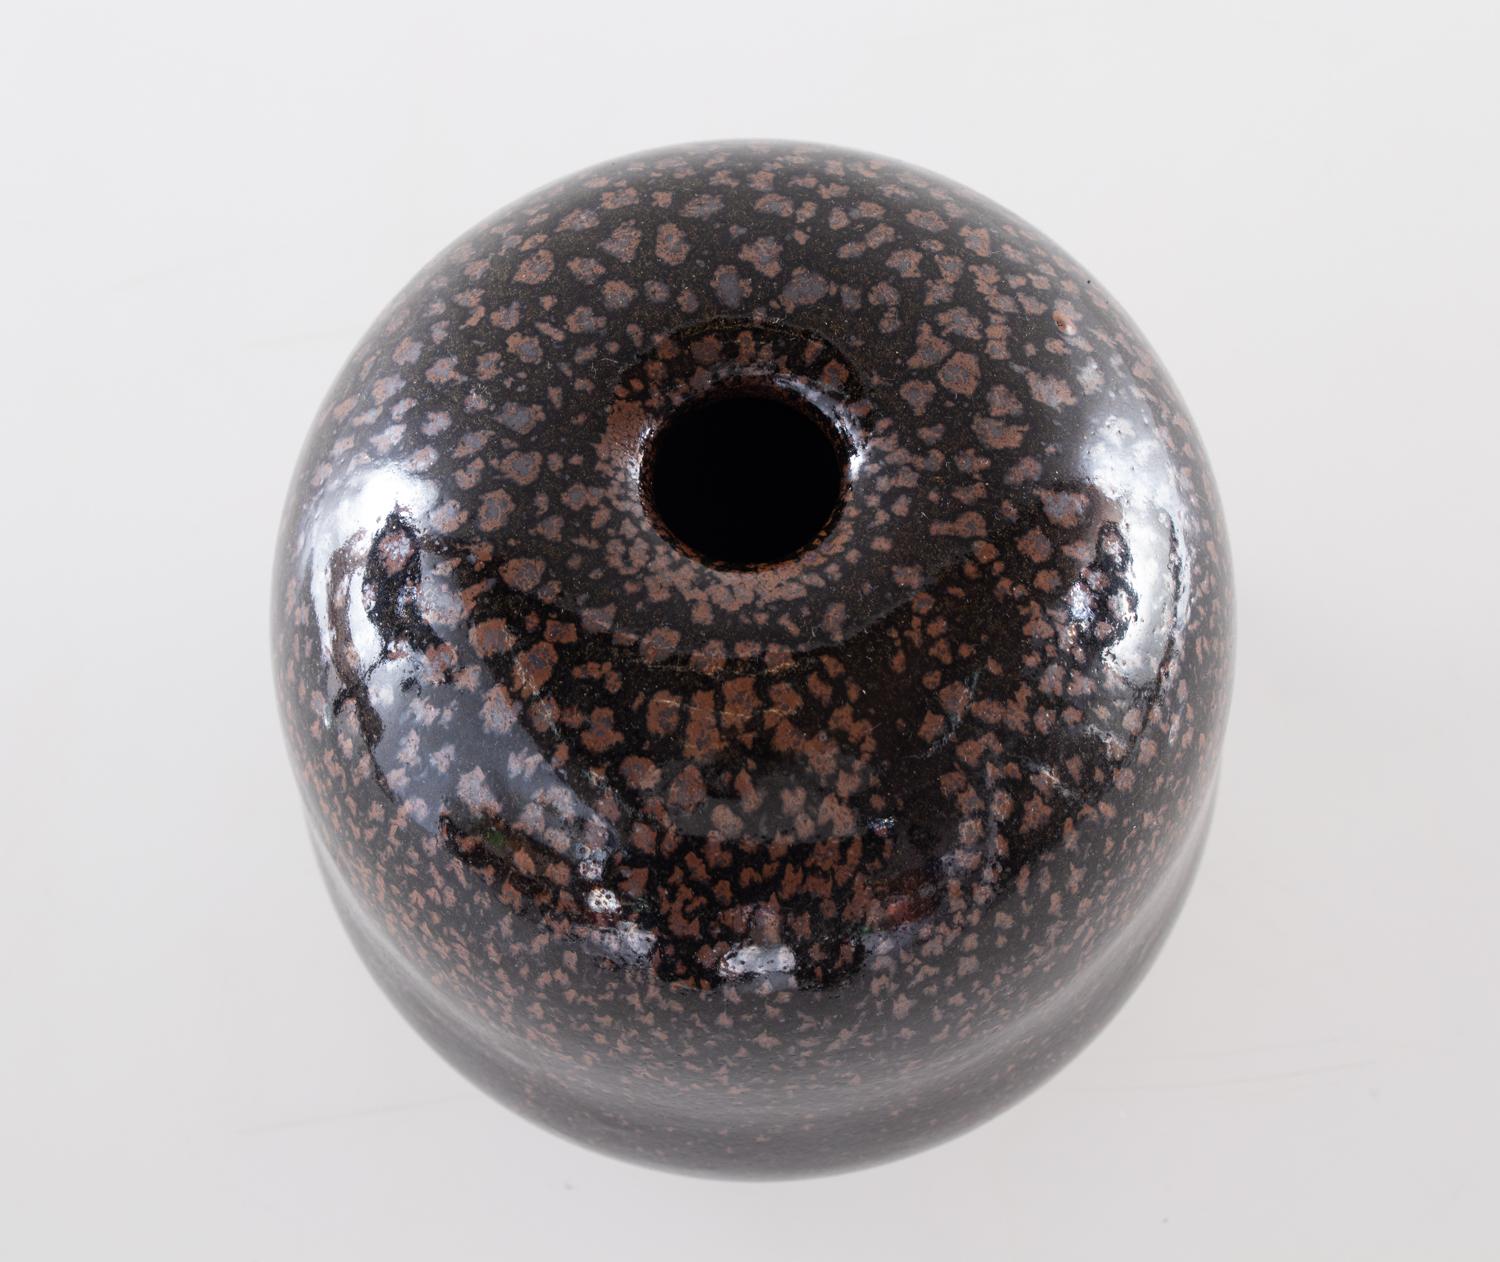 Ceramic Studio Pottery vase by Horst Kerstan, Kandern Germany 1980s

Measures: height 6.3